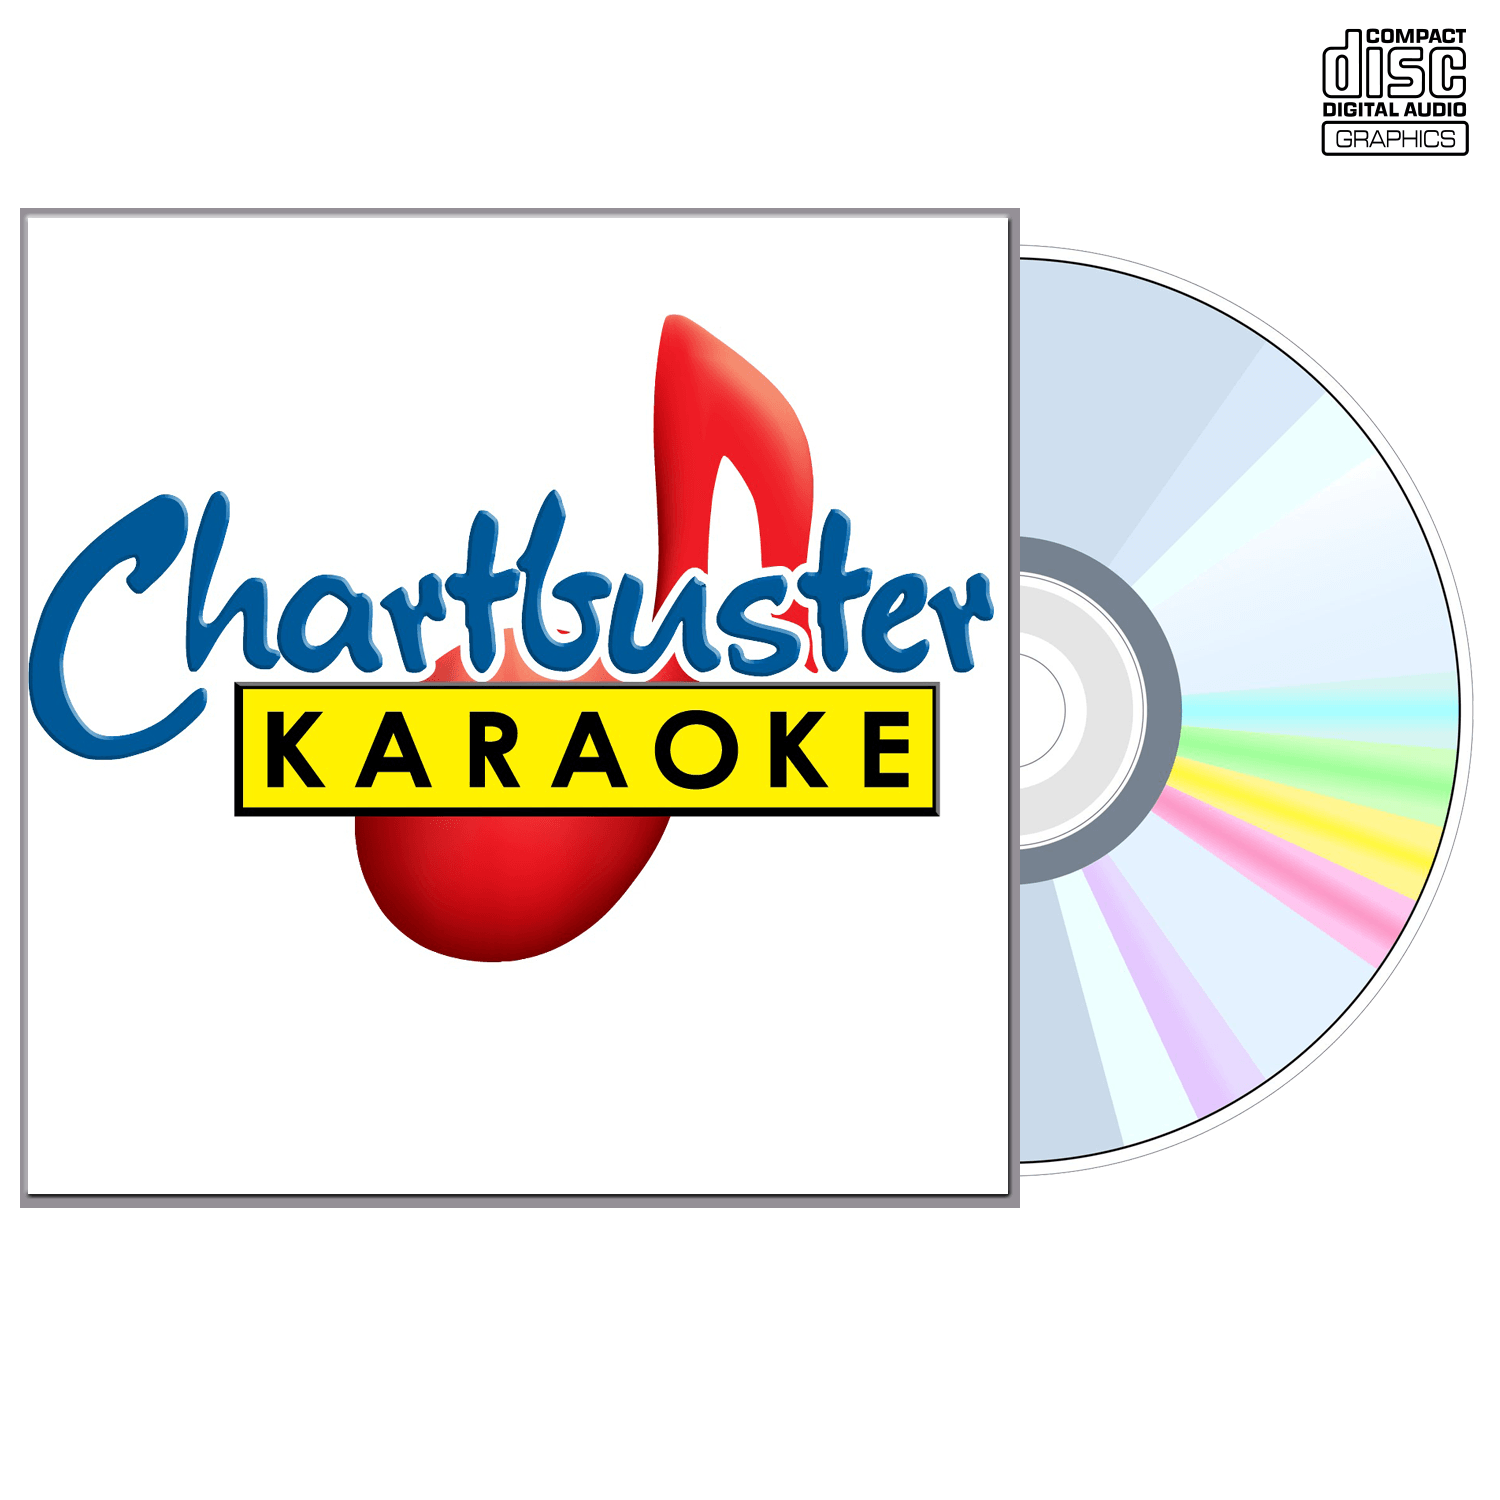 Ultimate Rock N Roll Vol 2 - CD+G - Chartbuster Karaoke - Karaoke Home Entertainment